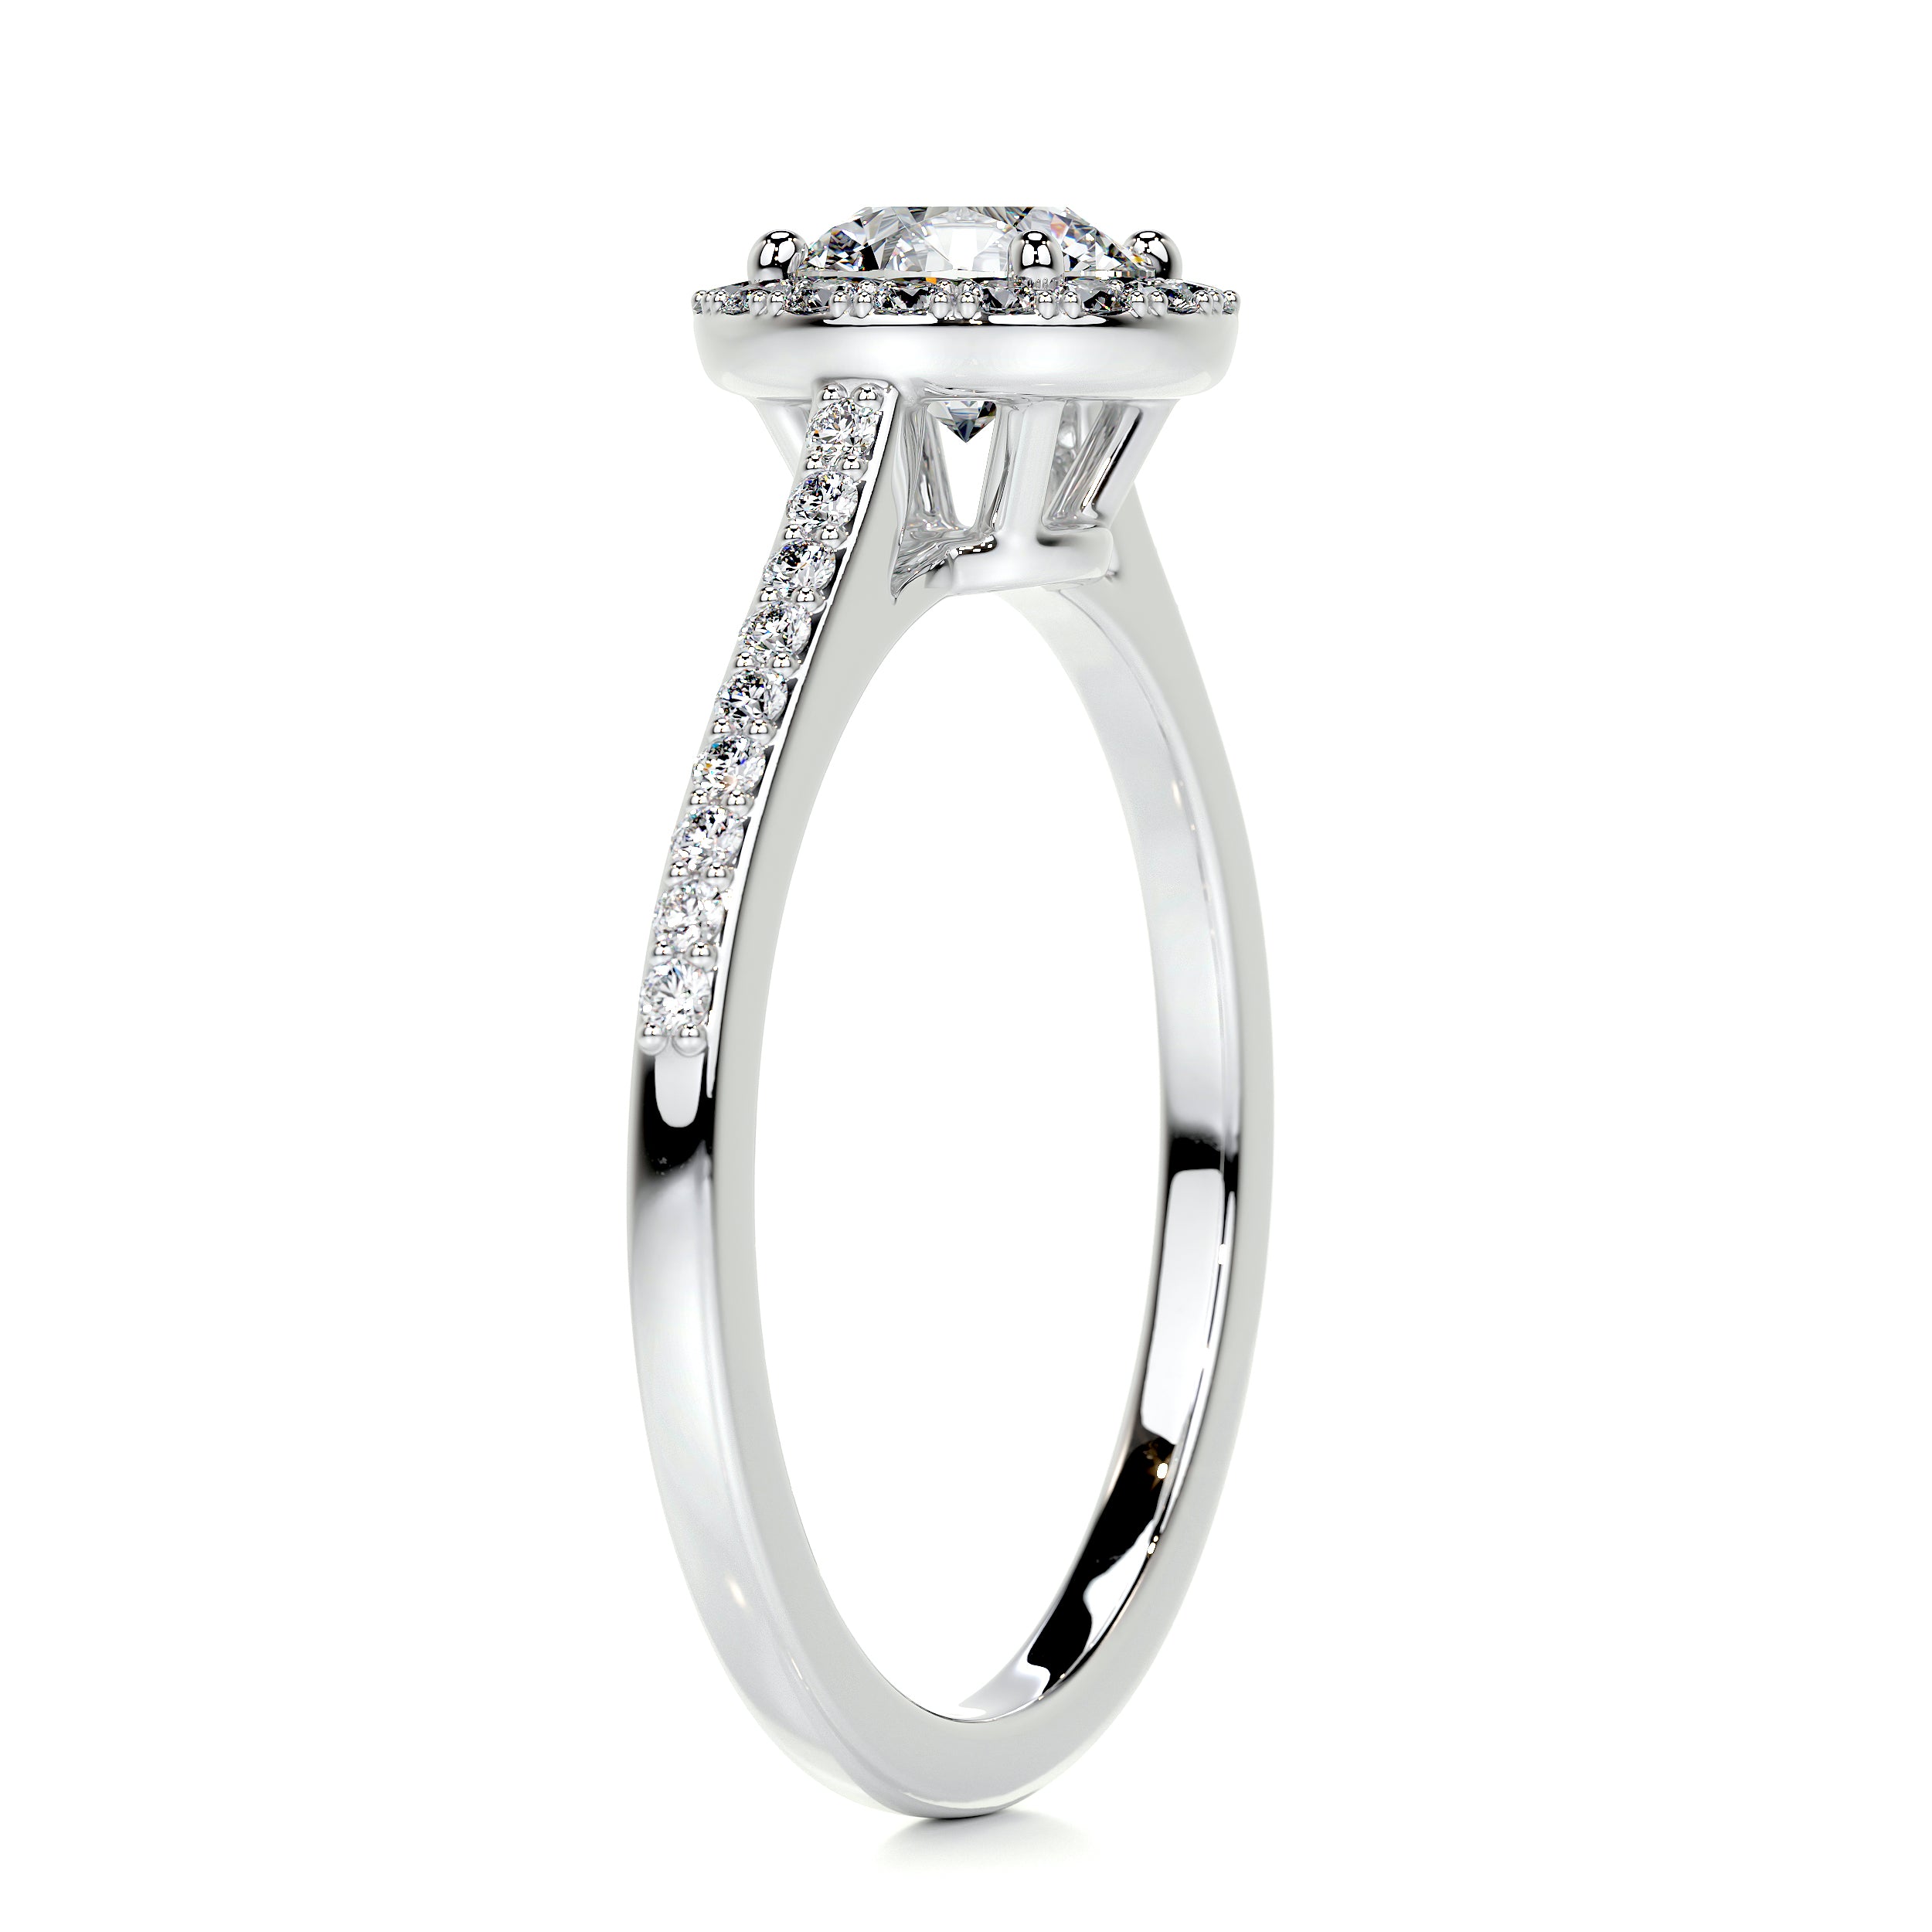 Layla Diamond Engagement Ring   (1.25 Carat) -Platinum